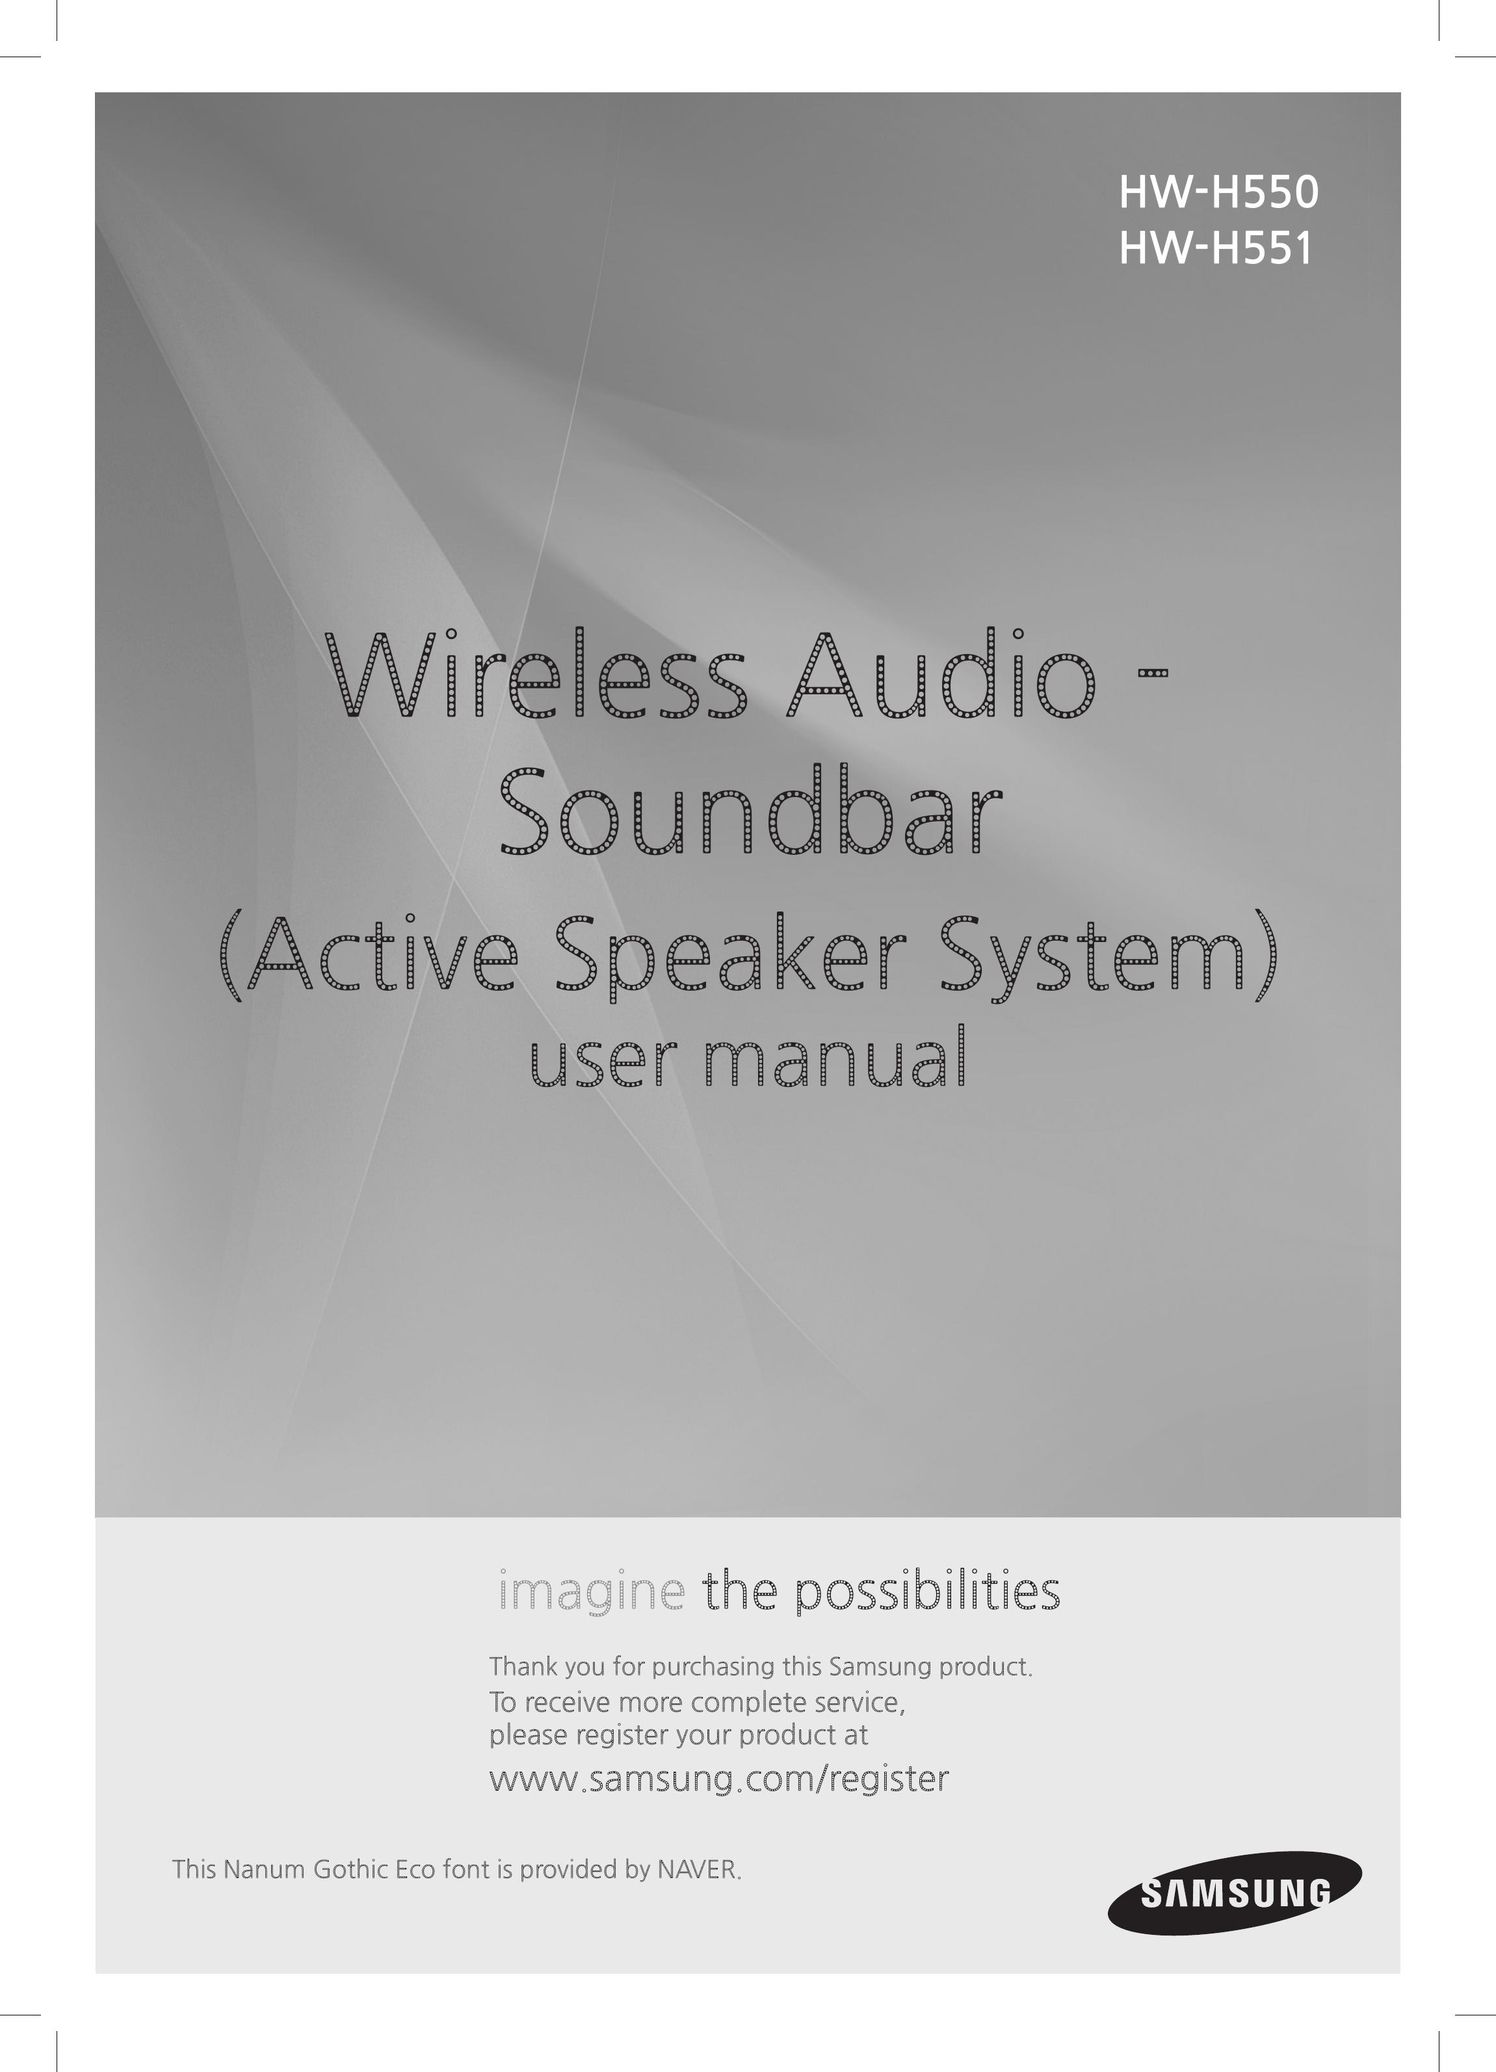 Samsung HWH550 Speaker System User Manual